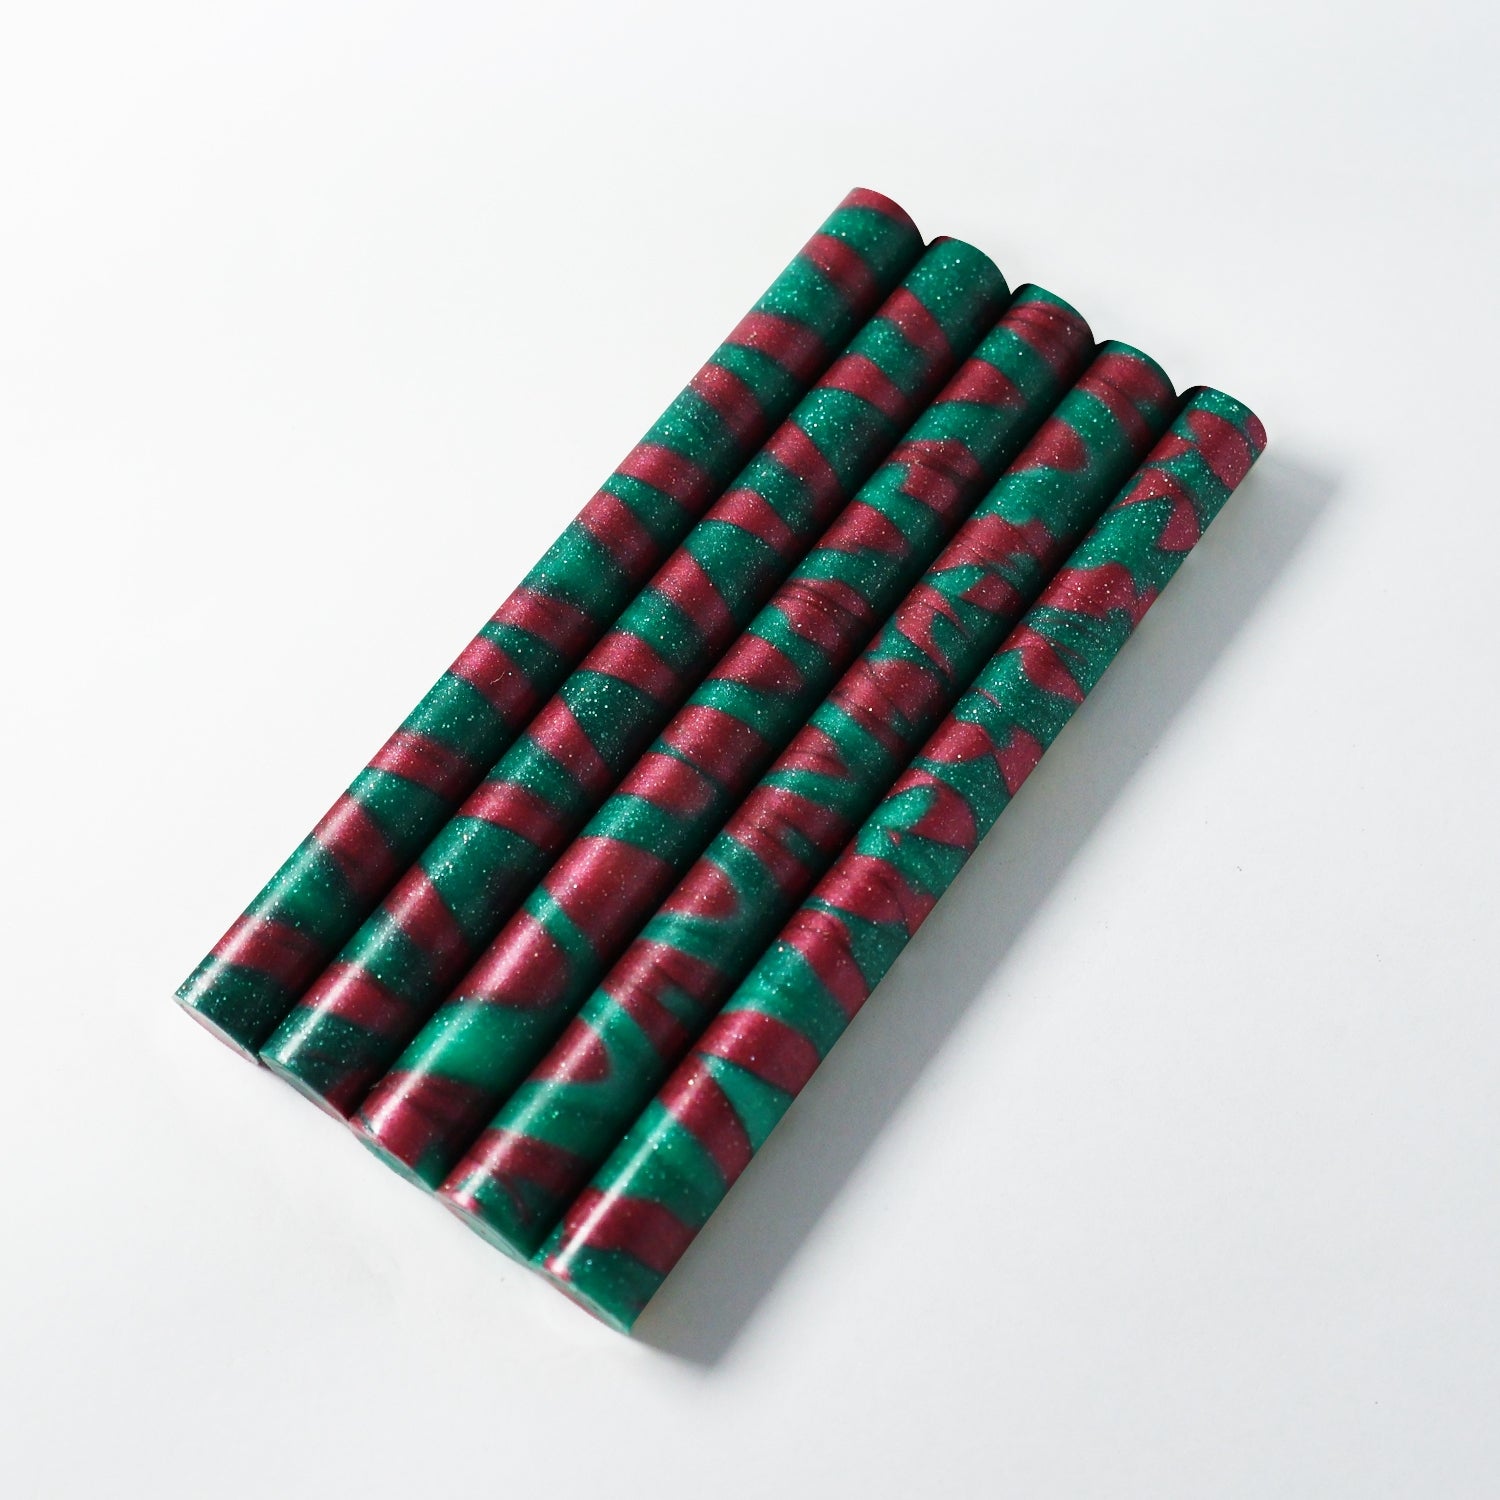 Dreamy Mixed Color Glue Gun Sealing Wax Stick - Green Red